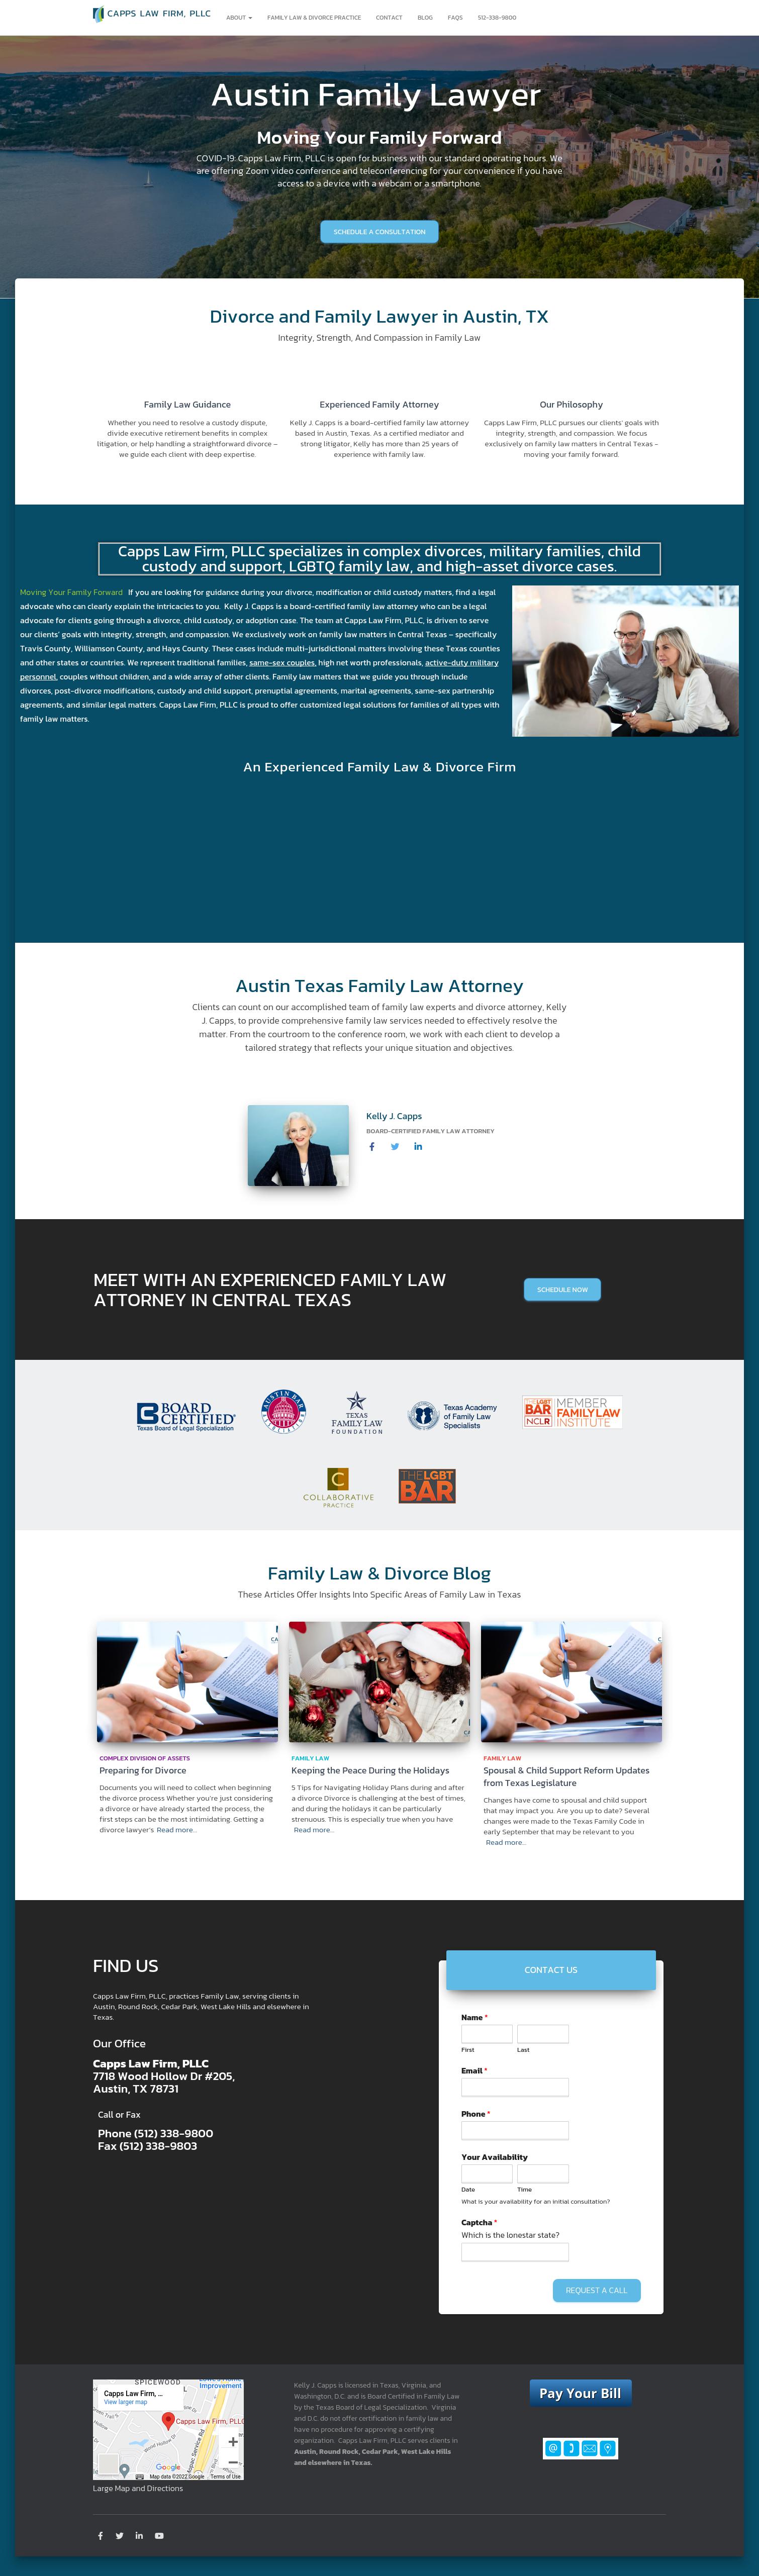 Capps Law Firm, PLLC - Austin TX Lawyers